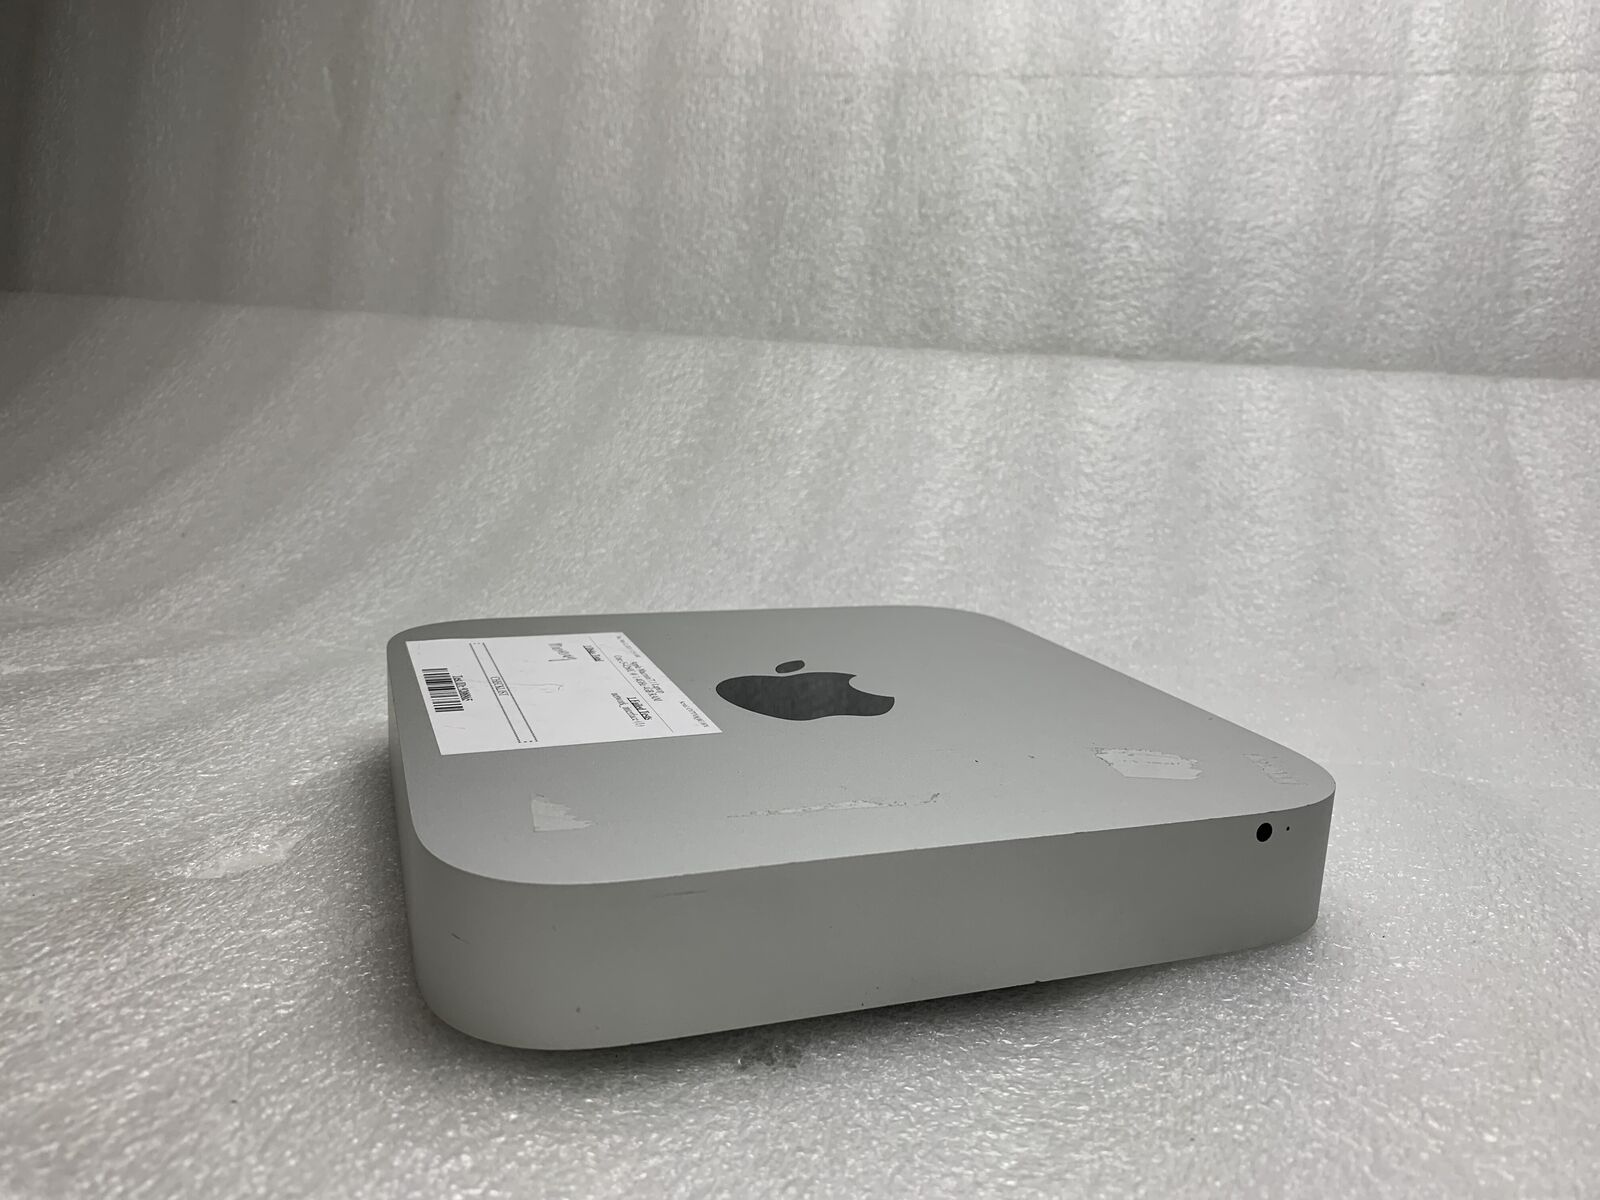 Apple Mac Mini A1347 2014 Desktop i5-4260U 1.40GHz 4GB RAM 500GB HDD Monterey